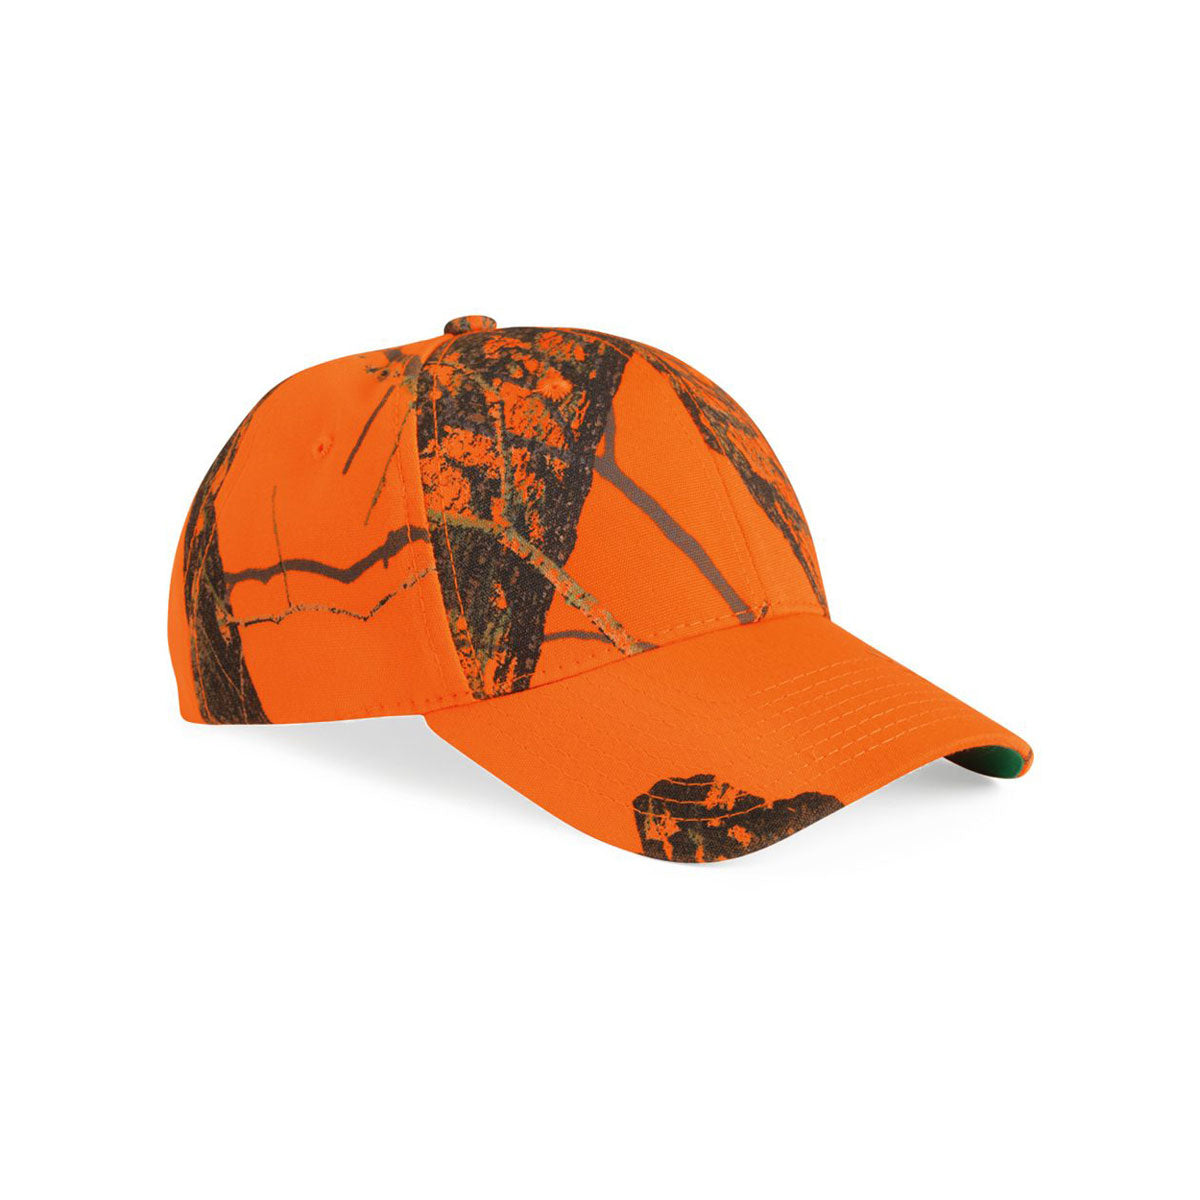 Mossy Oak Neon Orange Adjustable Hunting Outdoors Fishing Brand Hat Cap